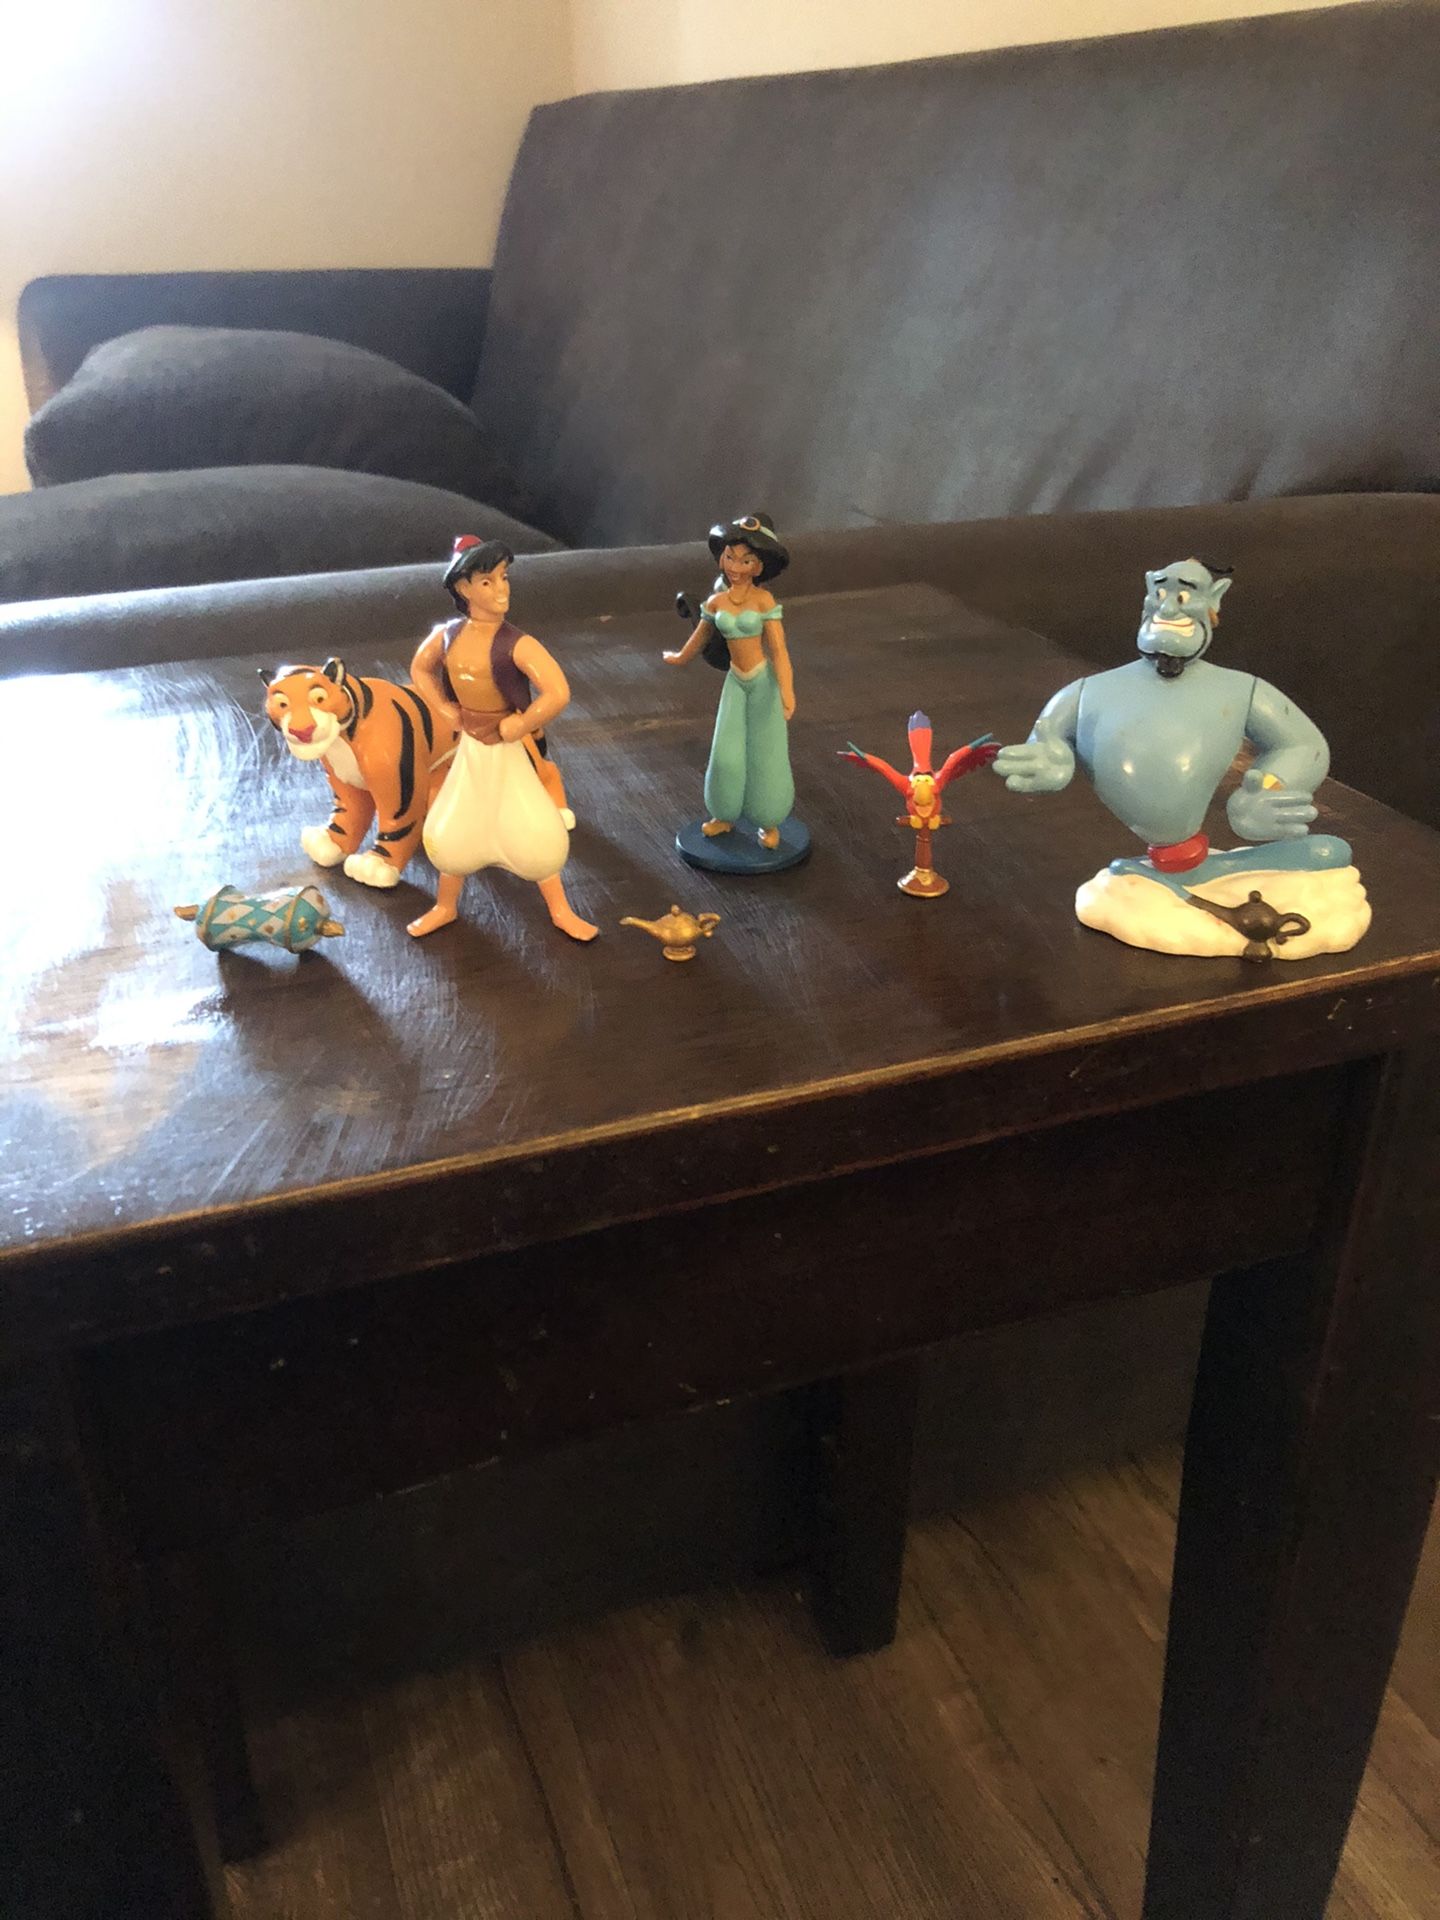 Disney’s Aladdin figures